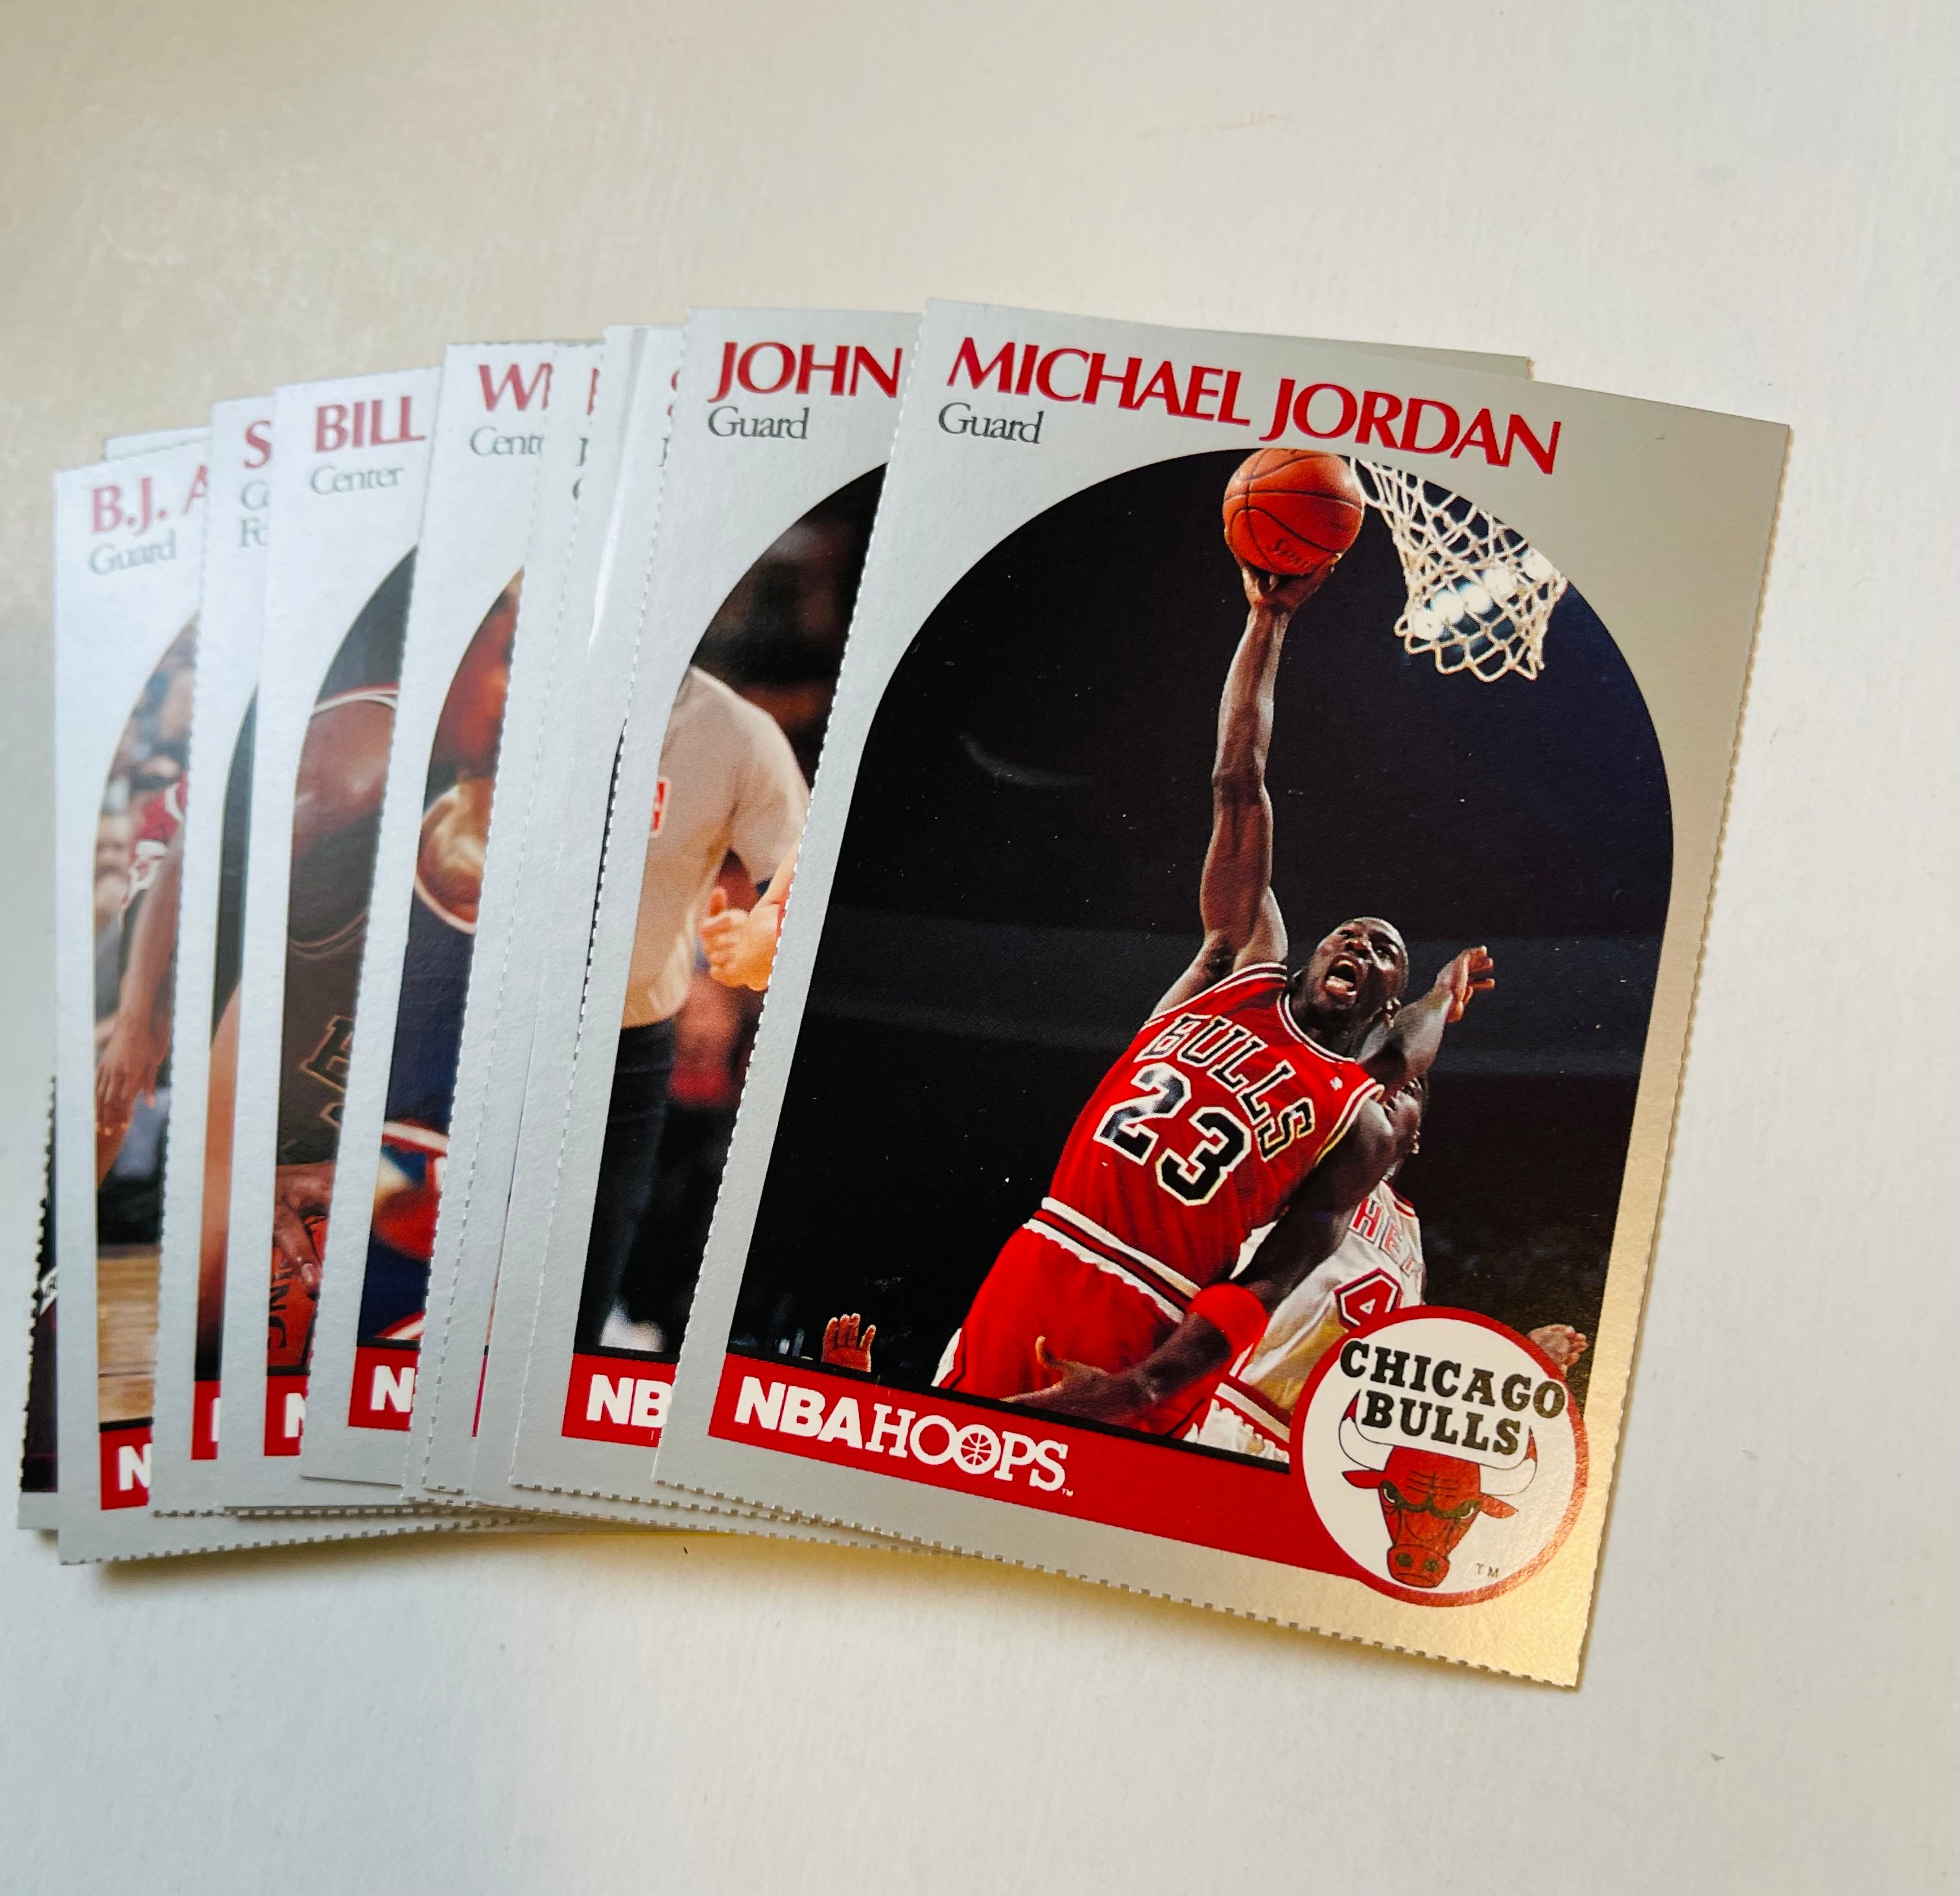 Osco Drugstore Chicago Bulls limited issued Hoops basketball team set 1990